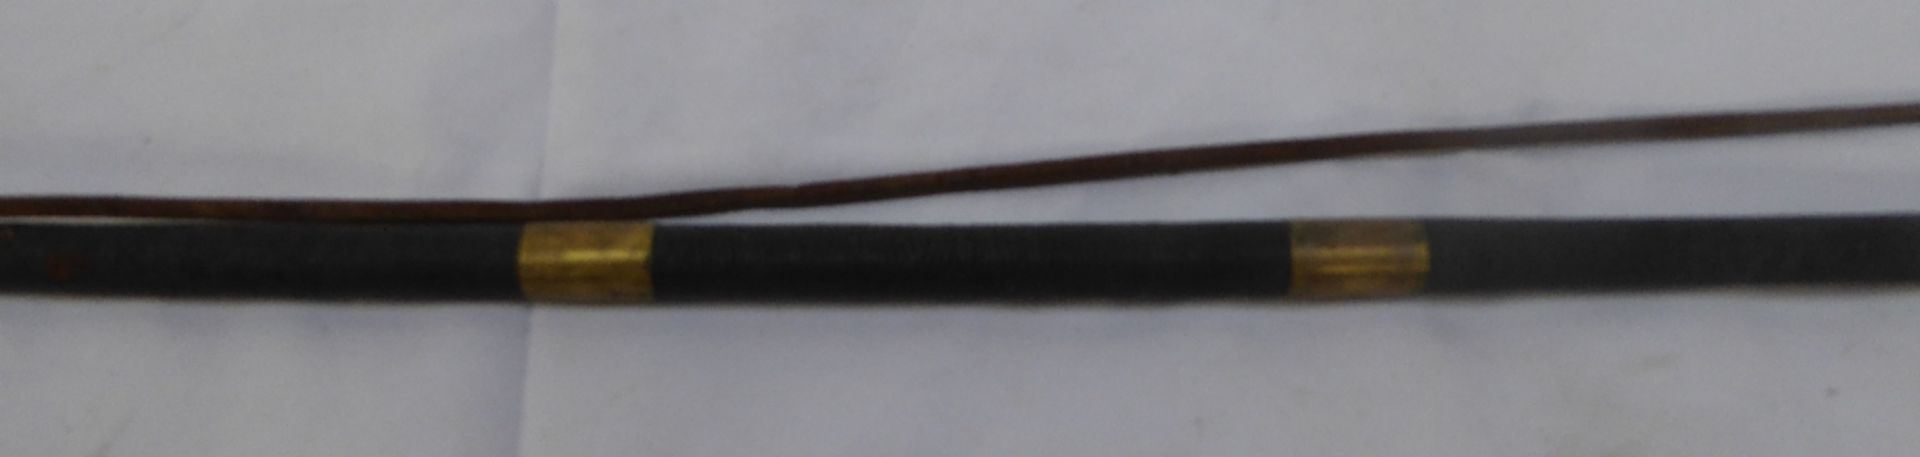 Steel-lined dealer's whip - Image 2 of 2